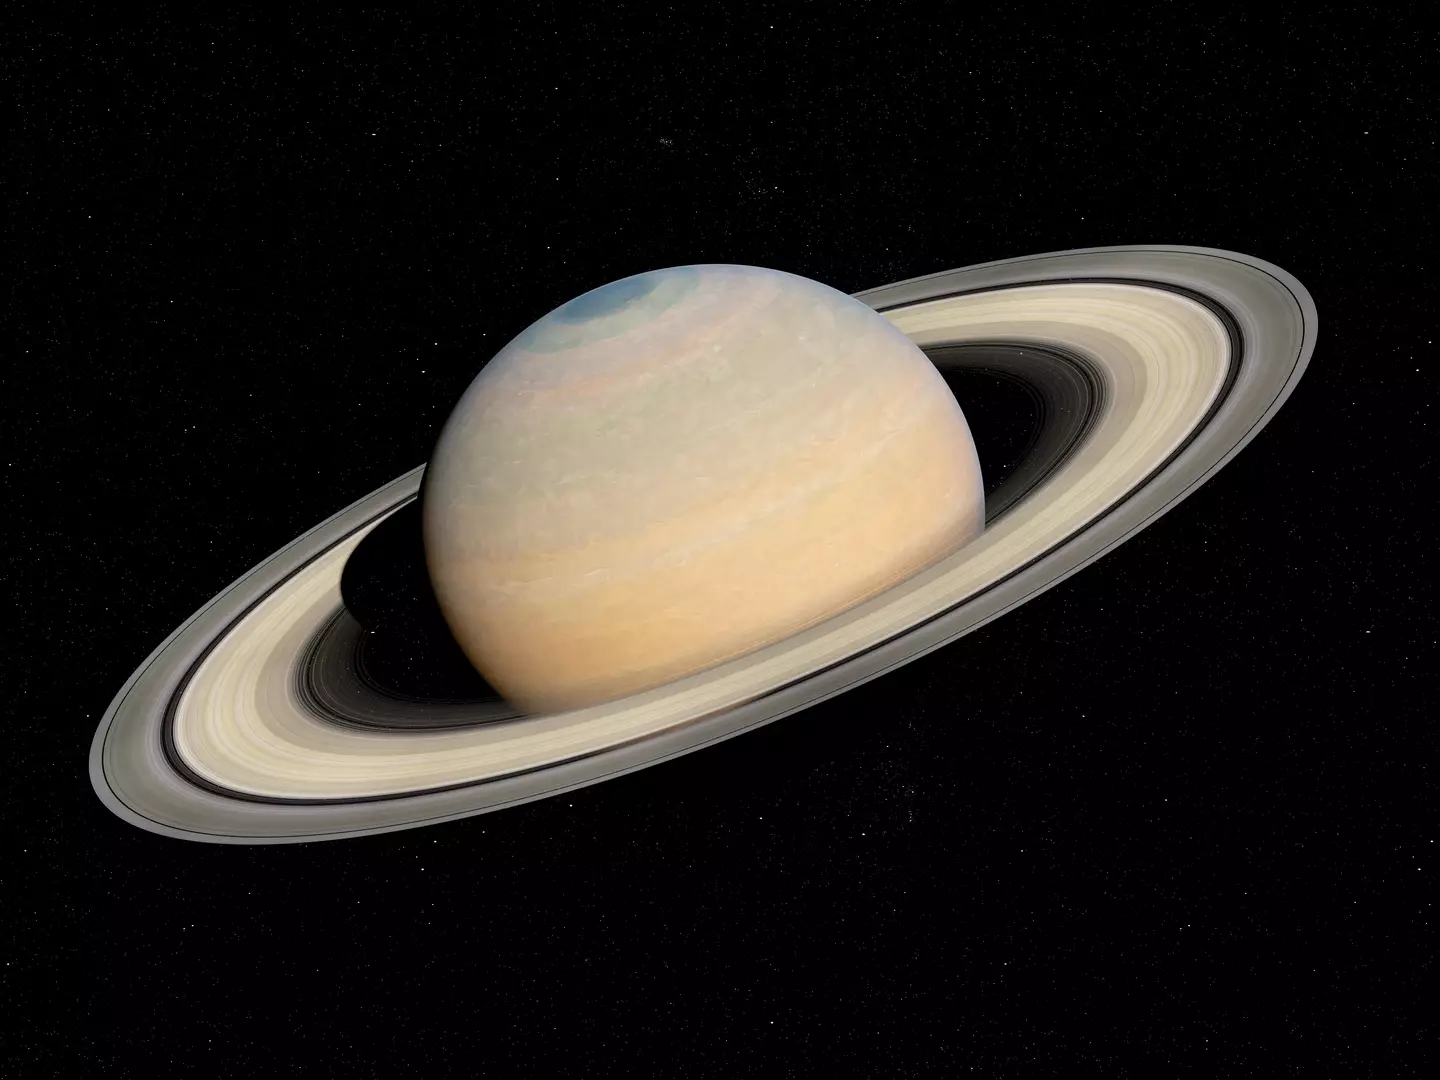 An illustration of Saturn.